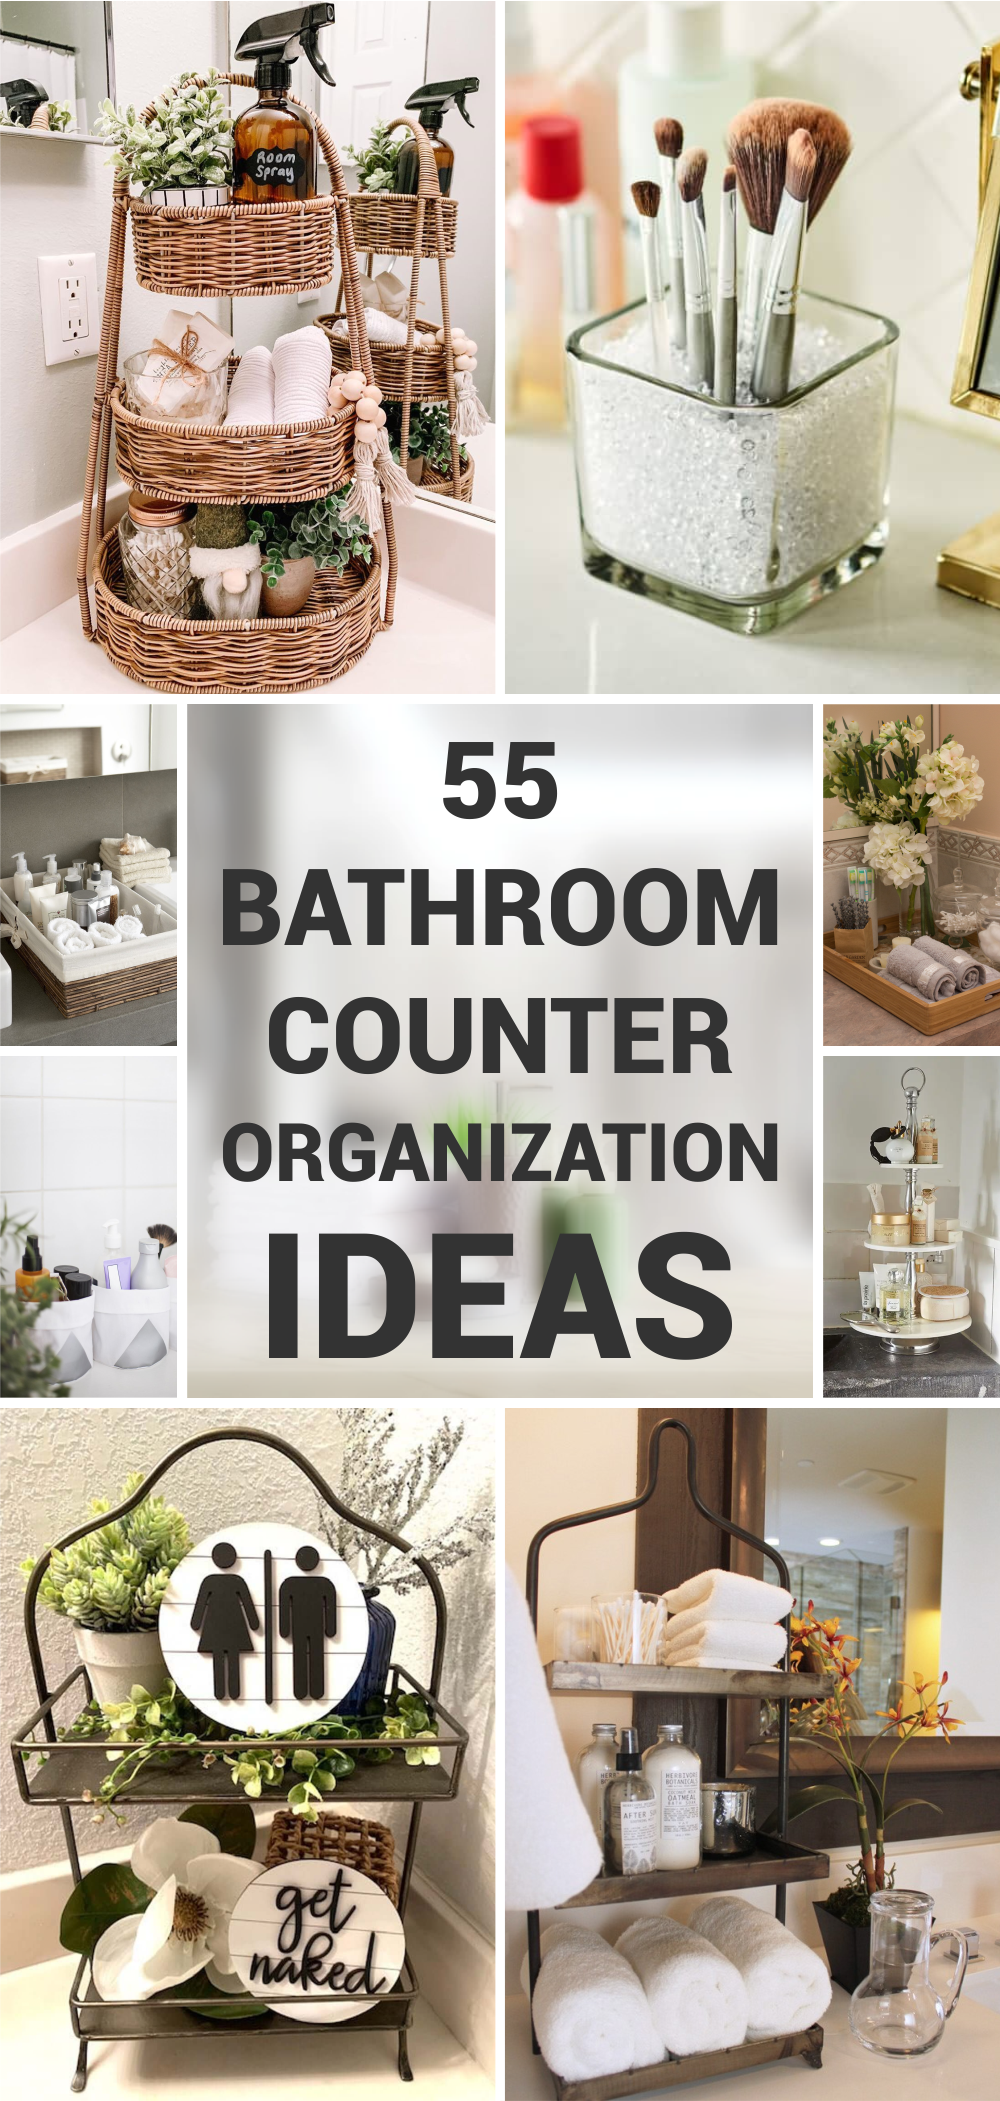 55 bathroom counter organization ideas1